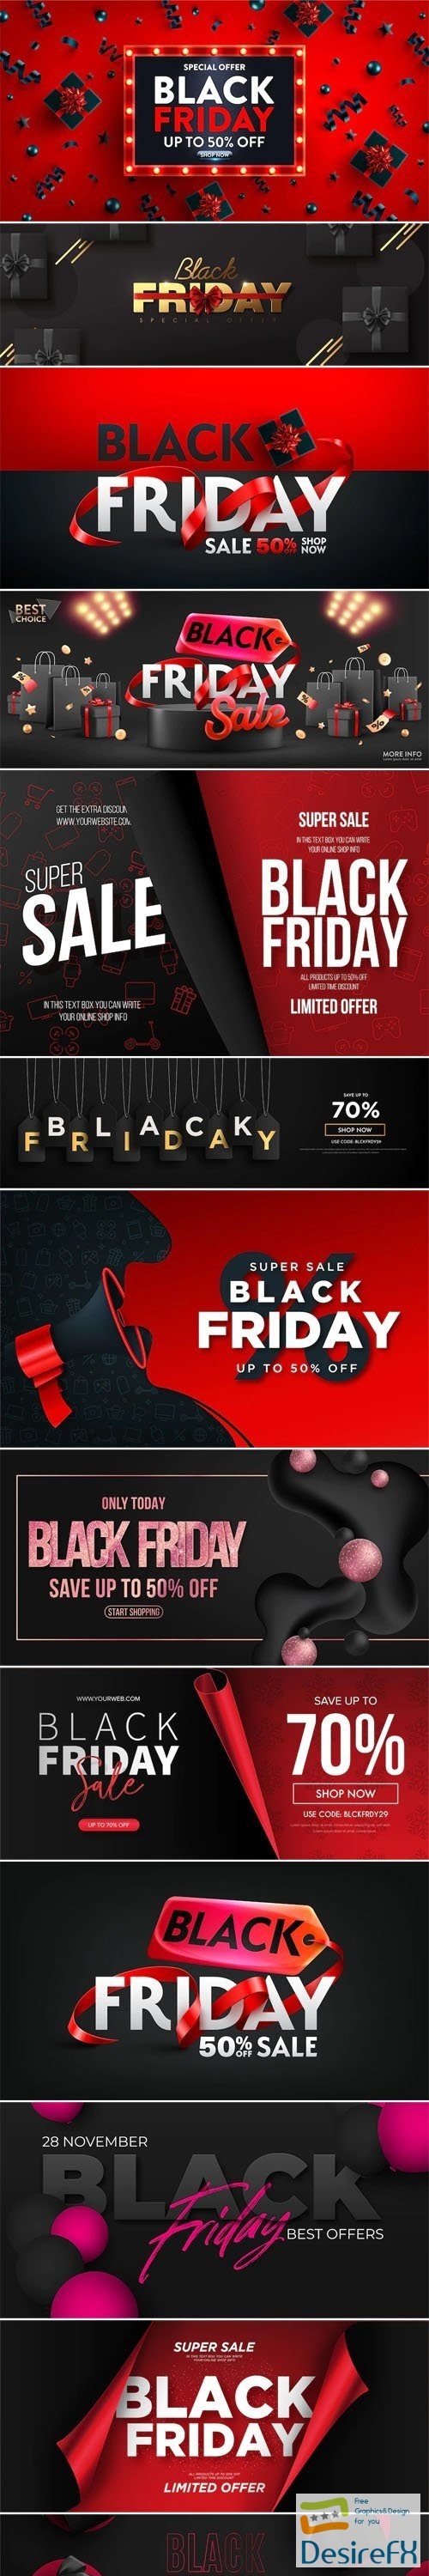 Black Friday - 10+ Web Banners Vector Templates Vol.4